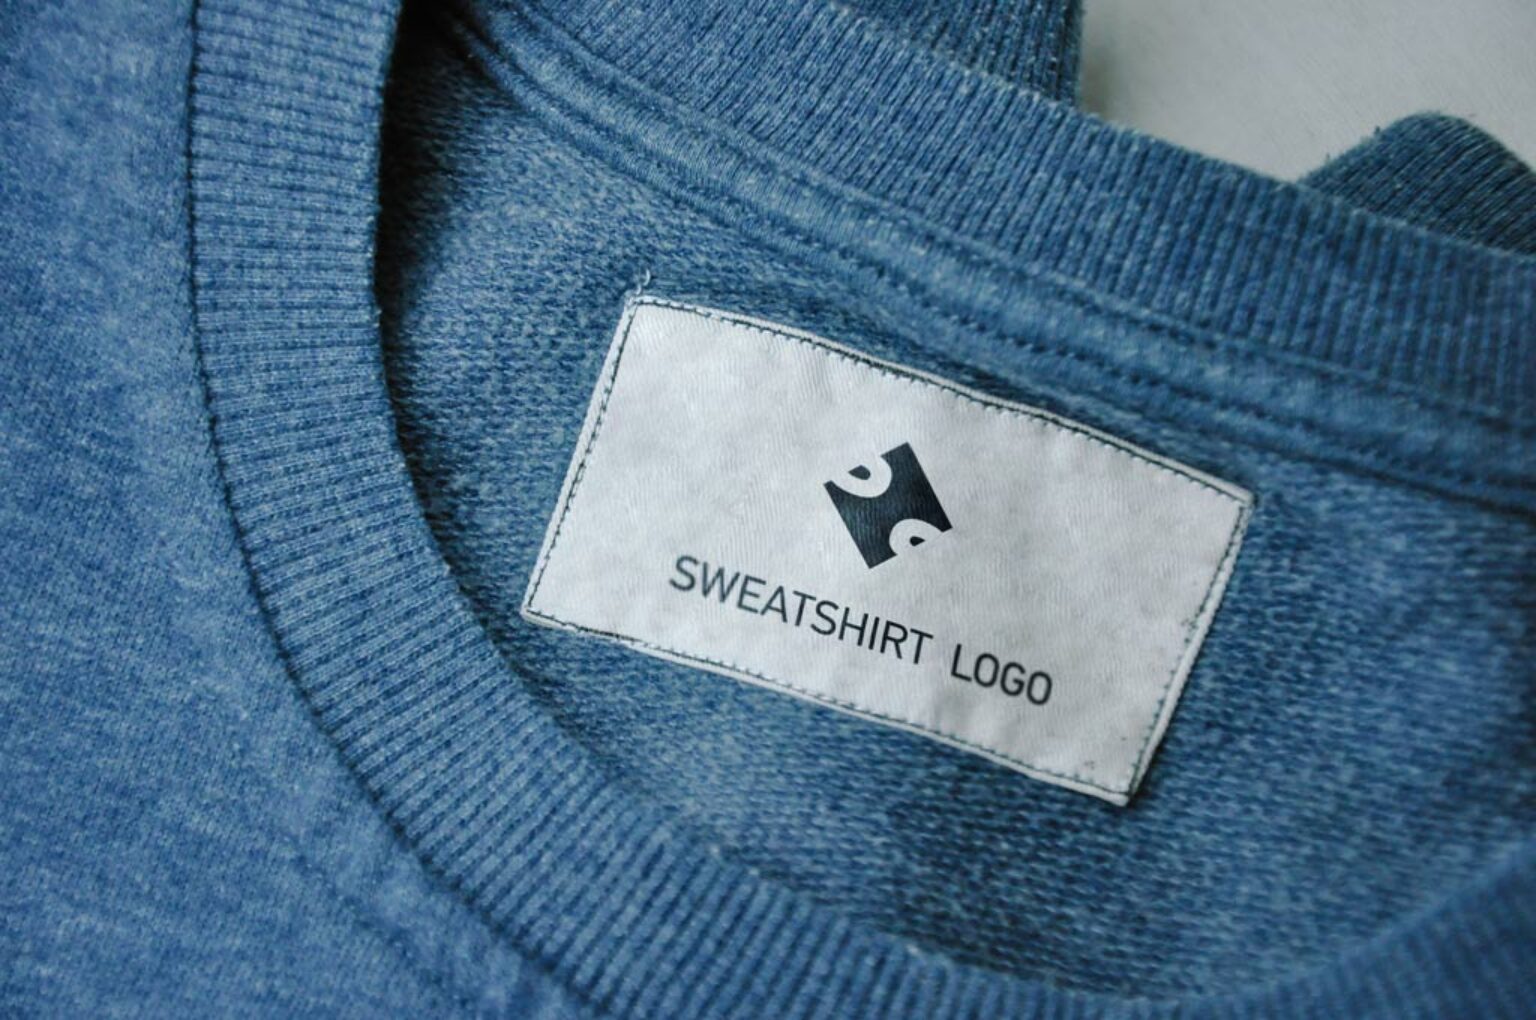 jeans-and-sweatshirt-label-mockups-mockup-world